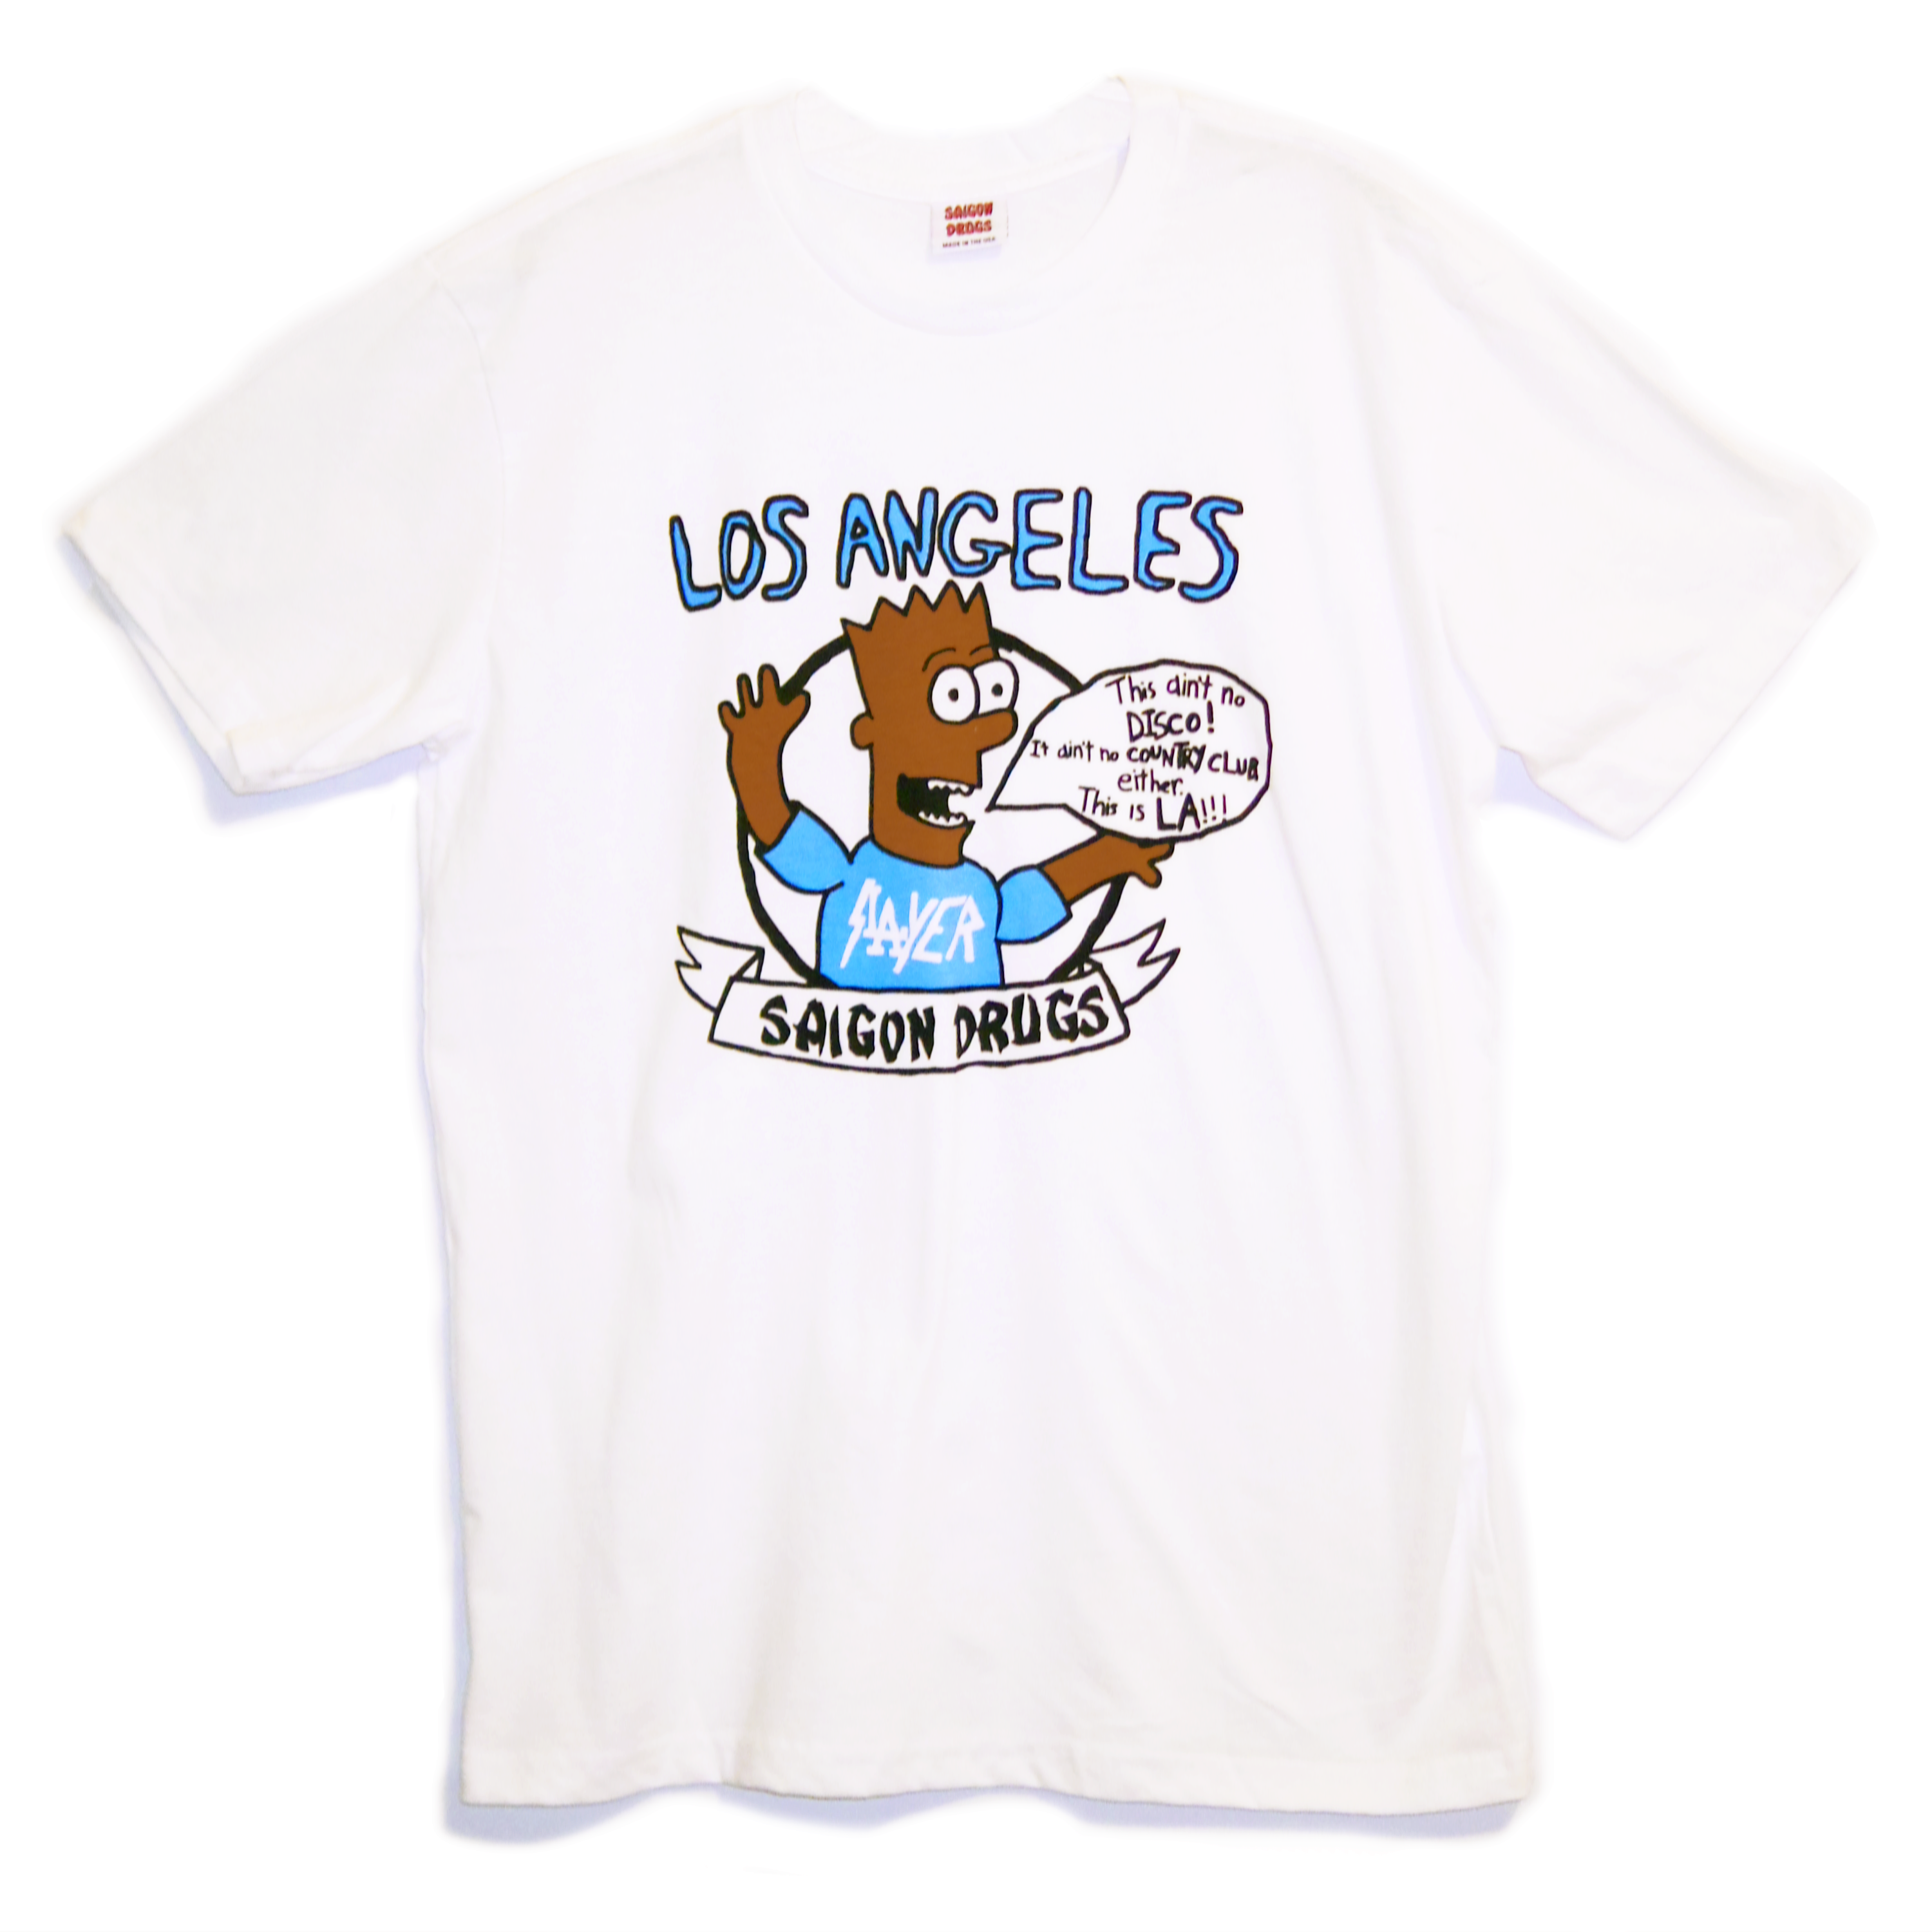 Bert Stanton's "Los Angeles" unisex t-shirt